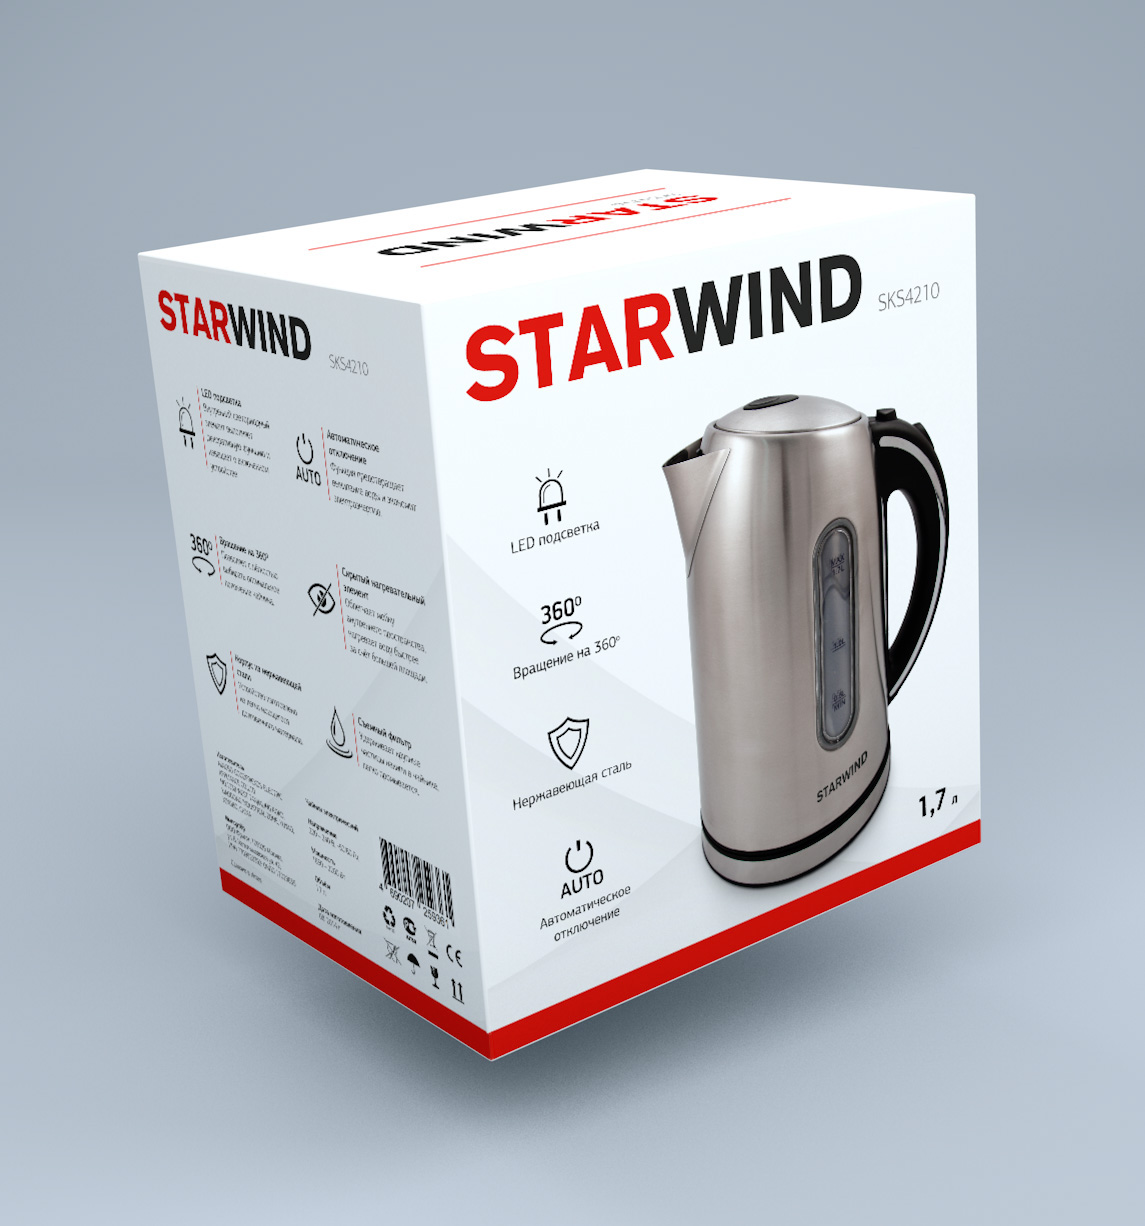 box packing kettle 3D starwind упаковка чайник